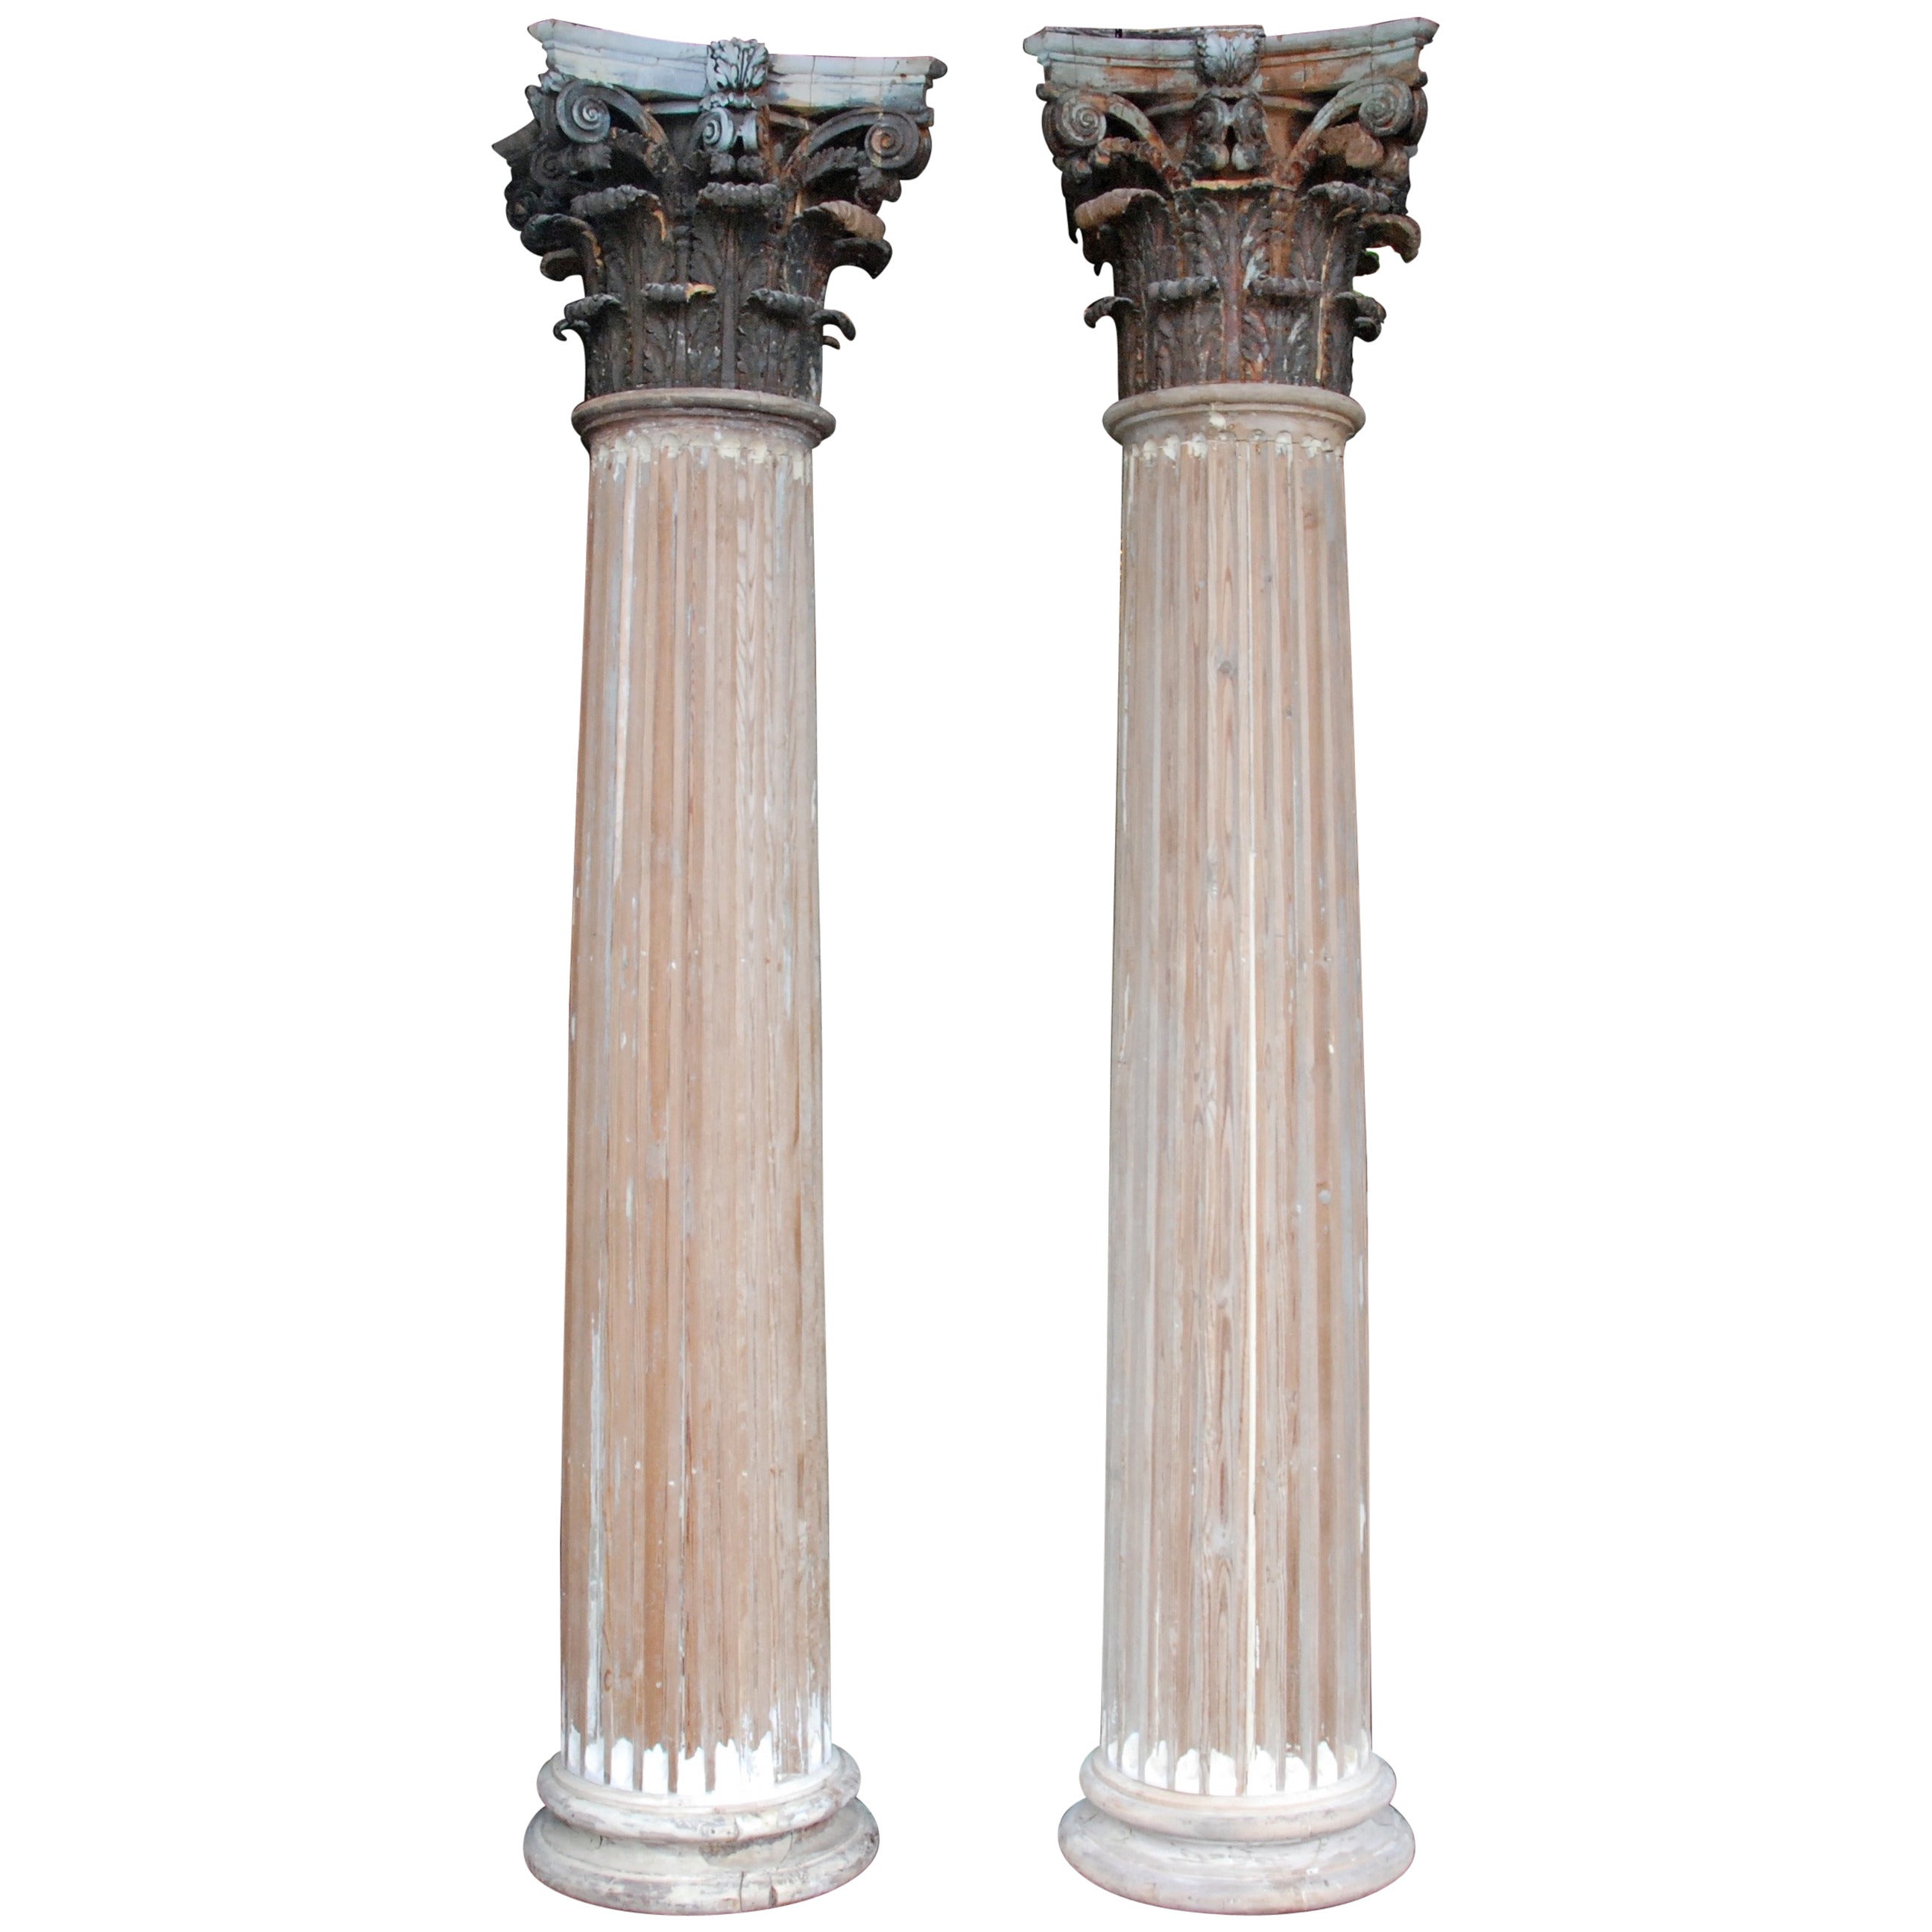 Pair of 19th Century Wood Columns